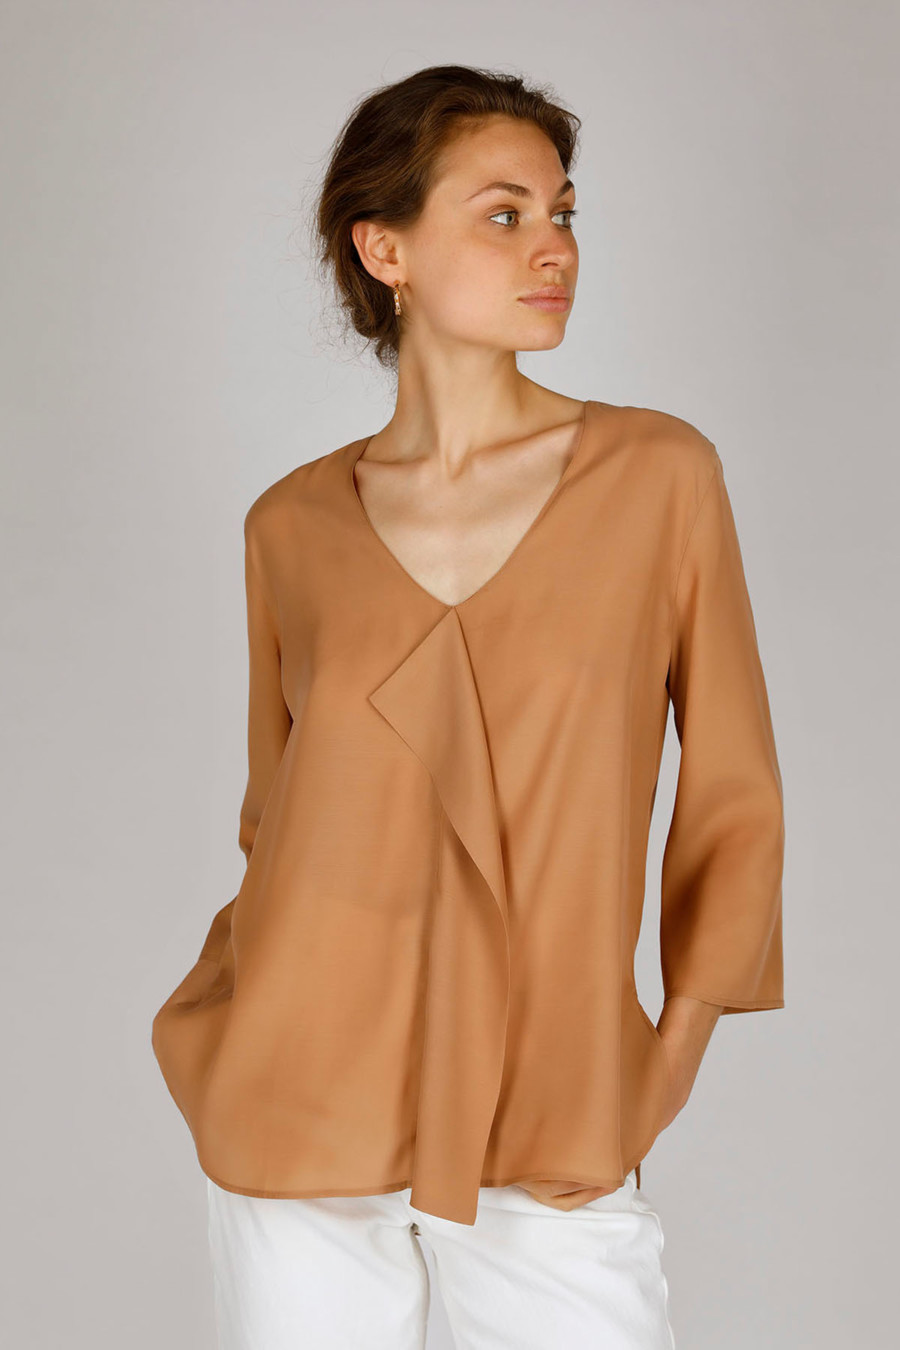 STELLA – Bluse mit V-Ausschnitt – Farbe: Caramel